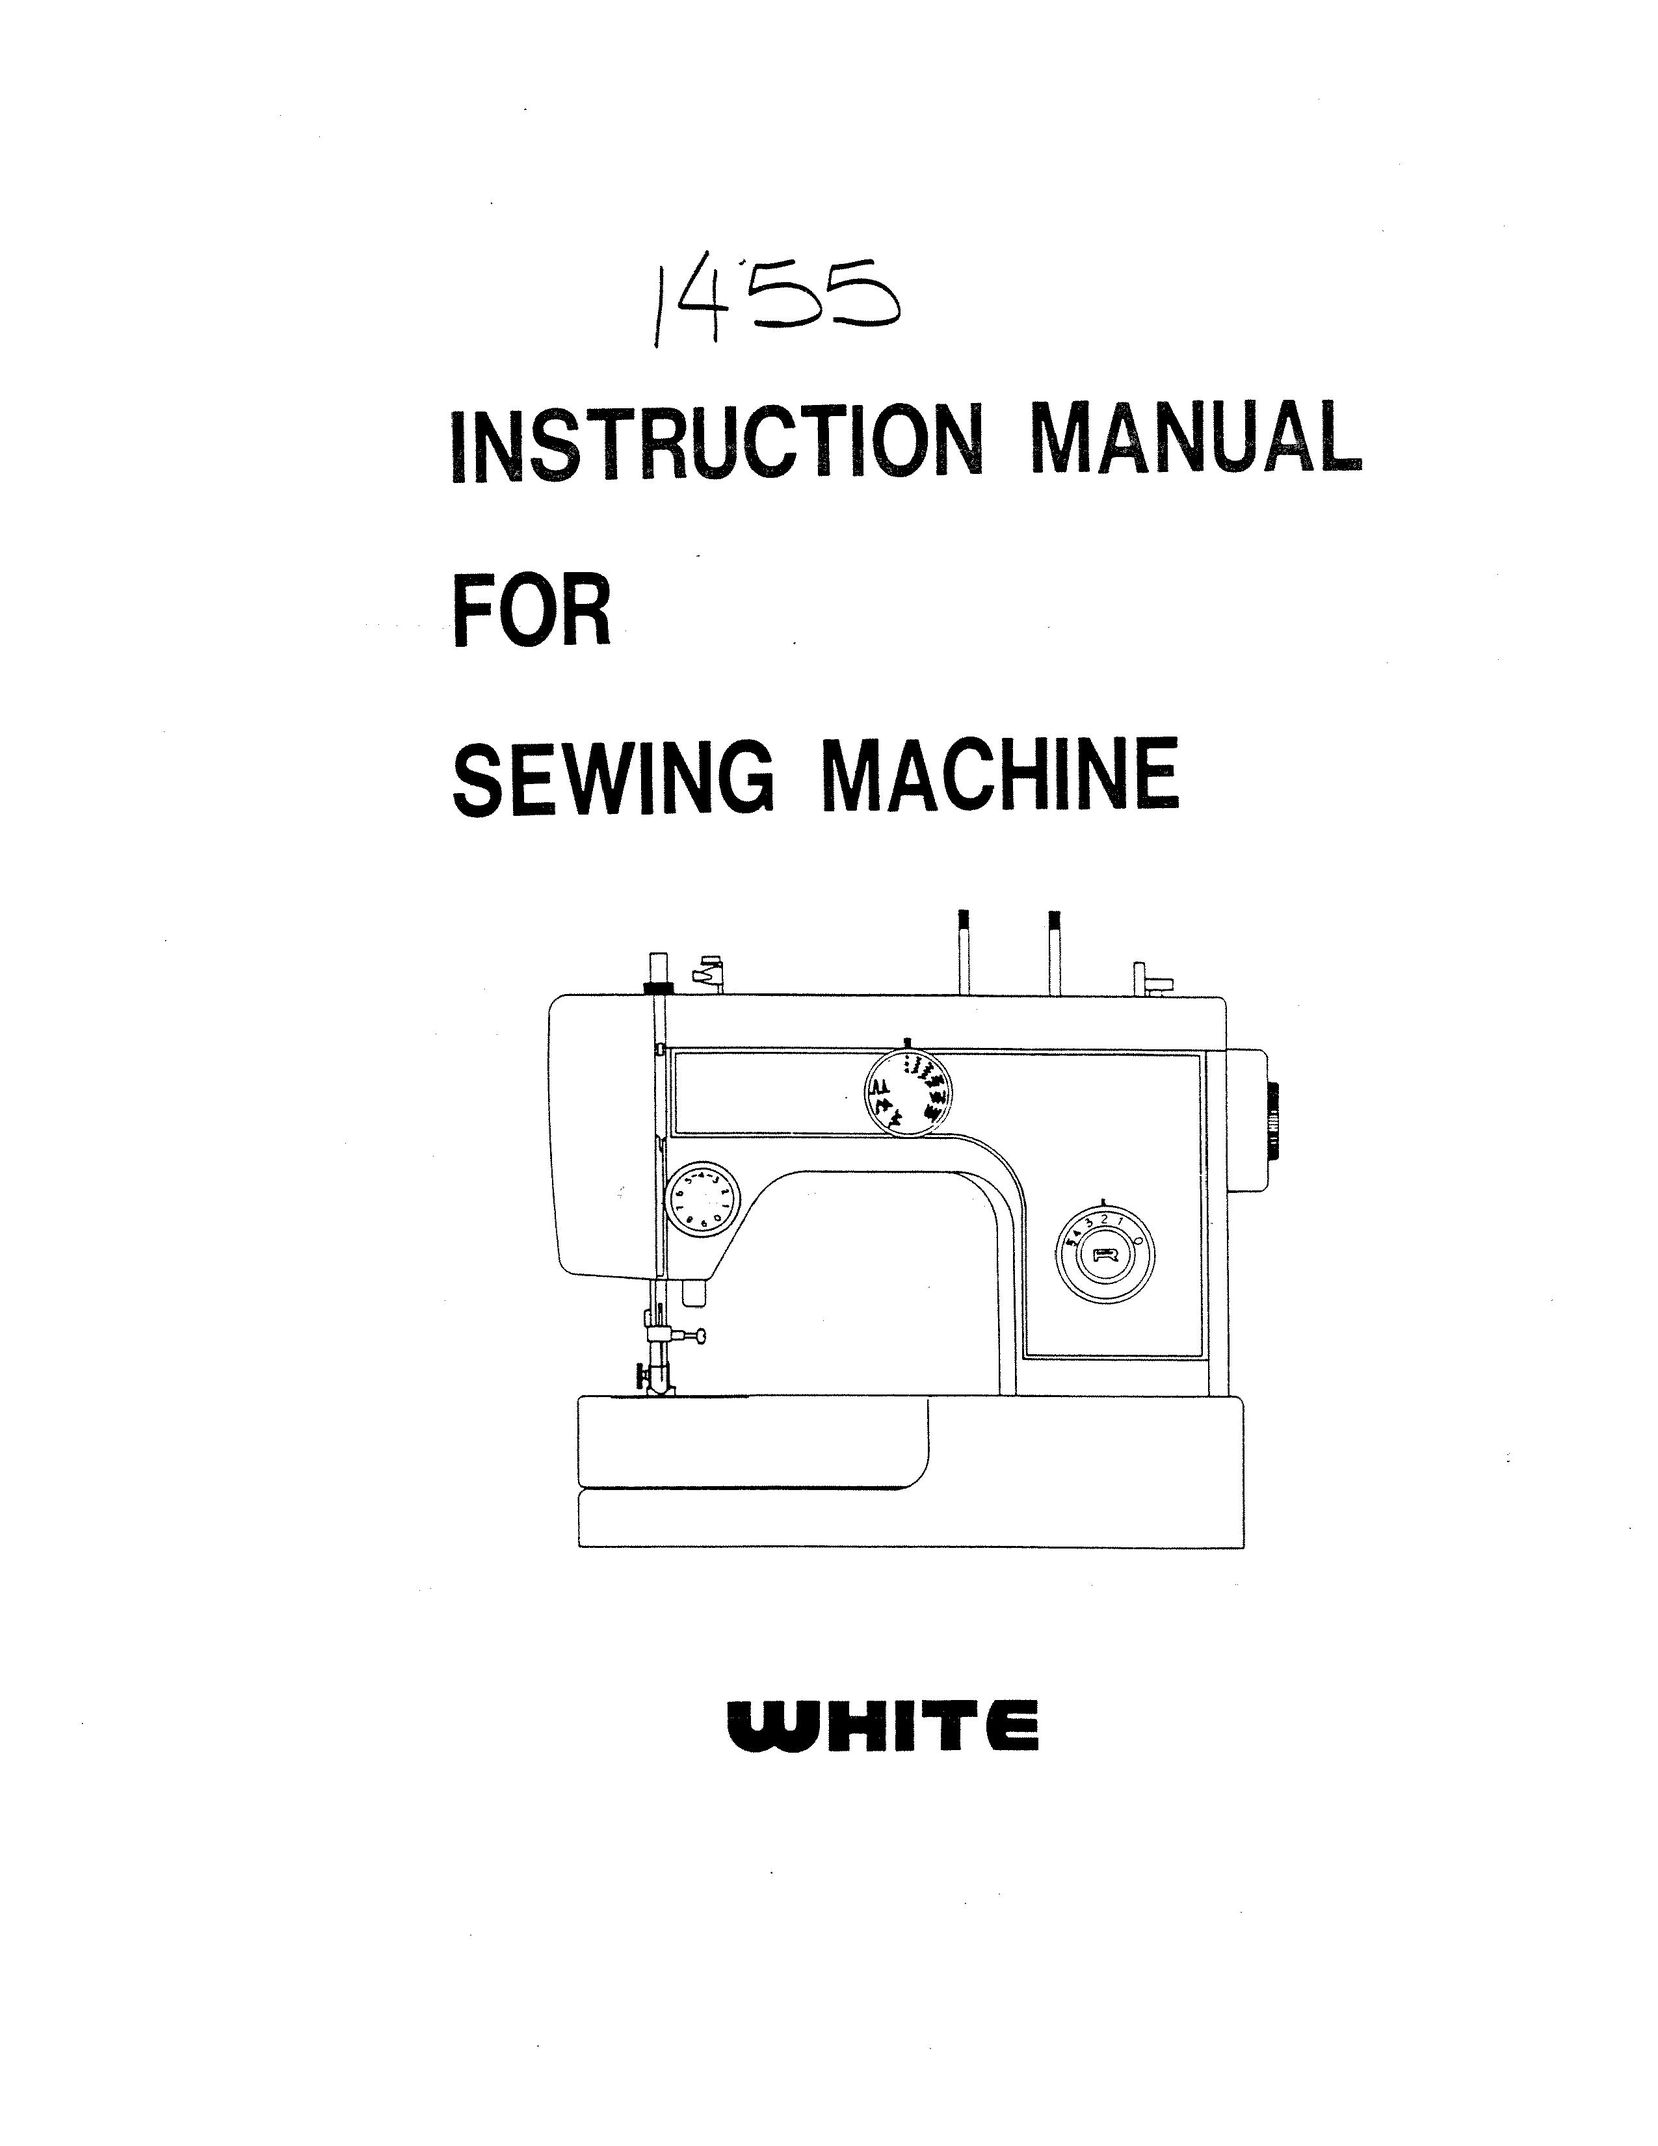 White 1455 Sewing Machine User Manual